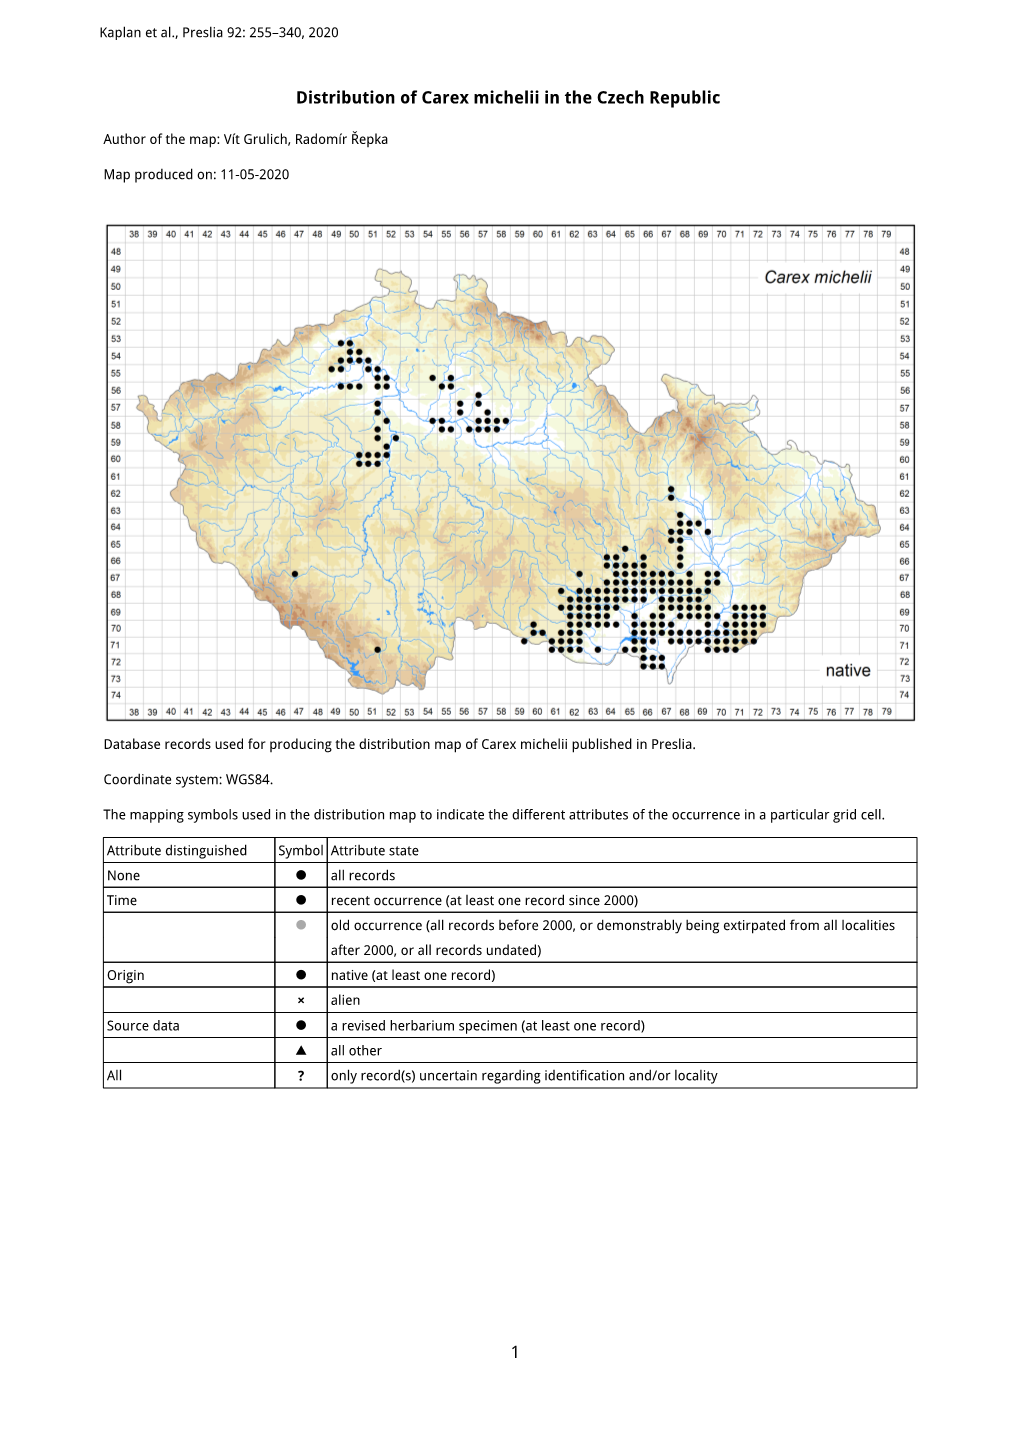 1 Distribution of Carex Michelii in the Czech Republic